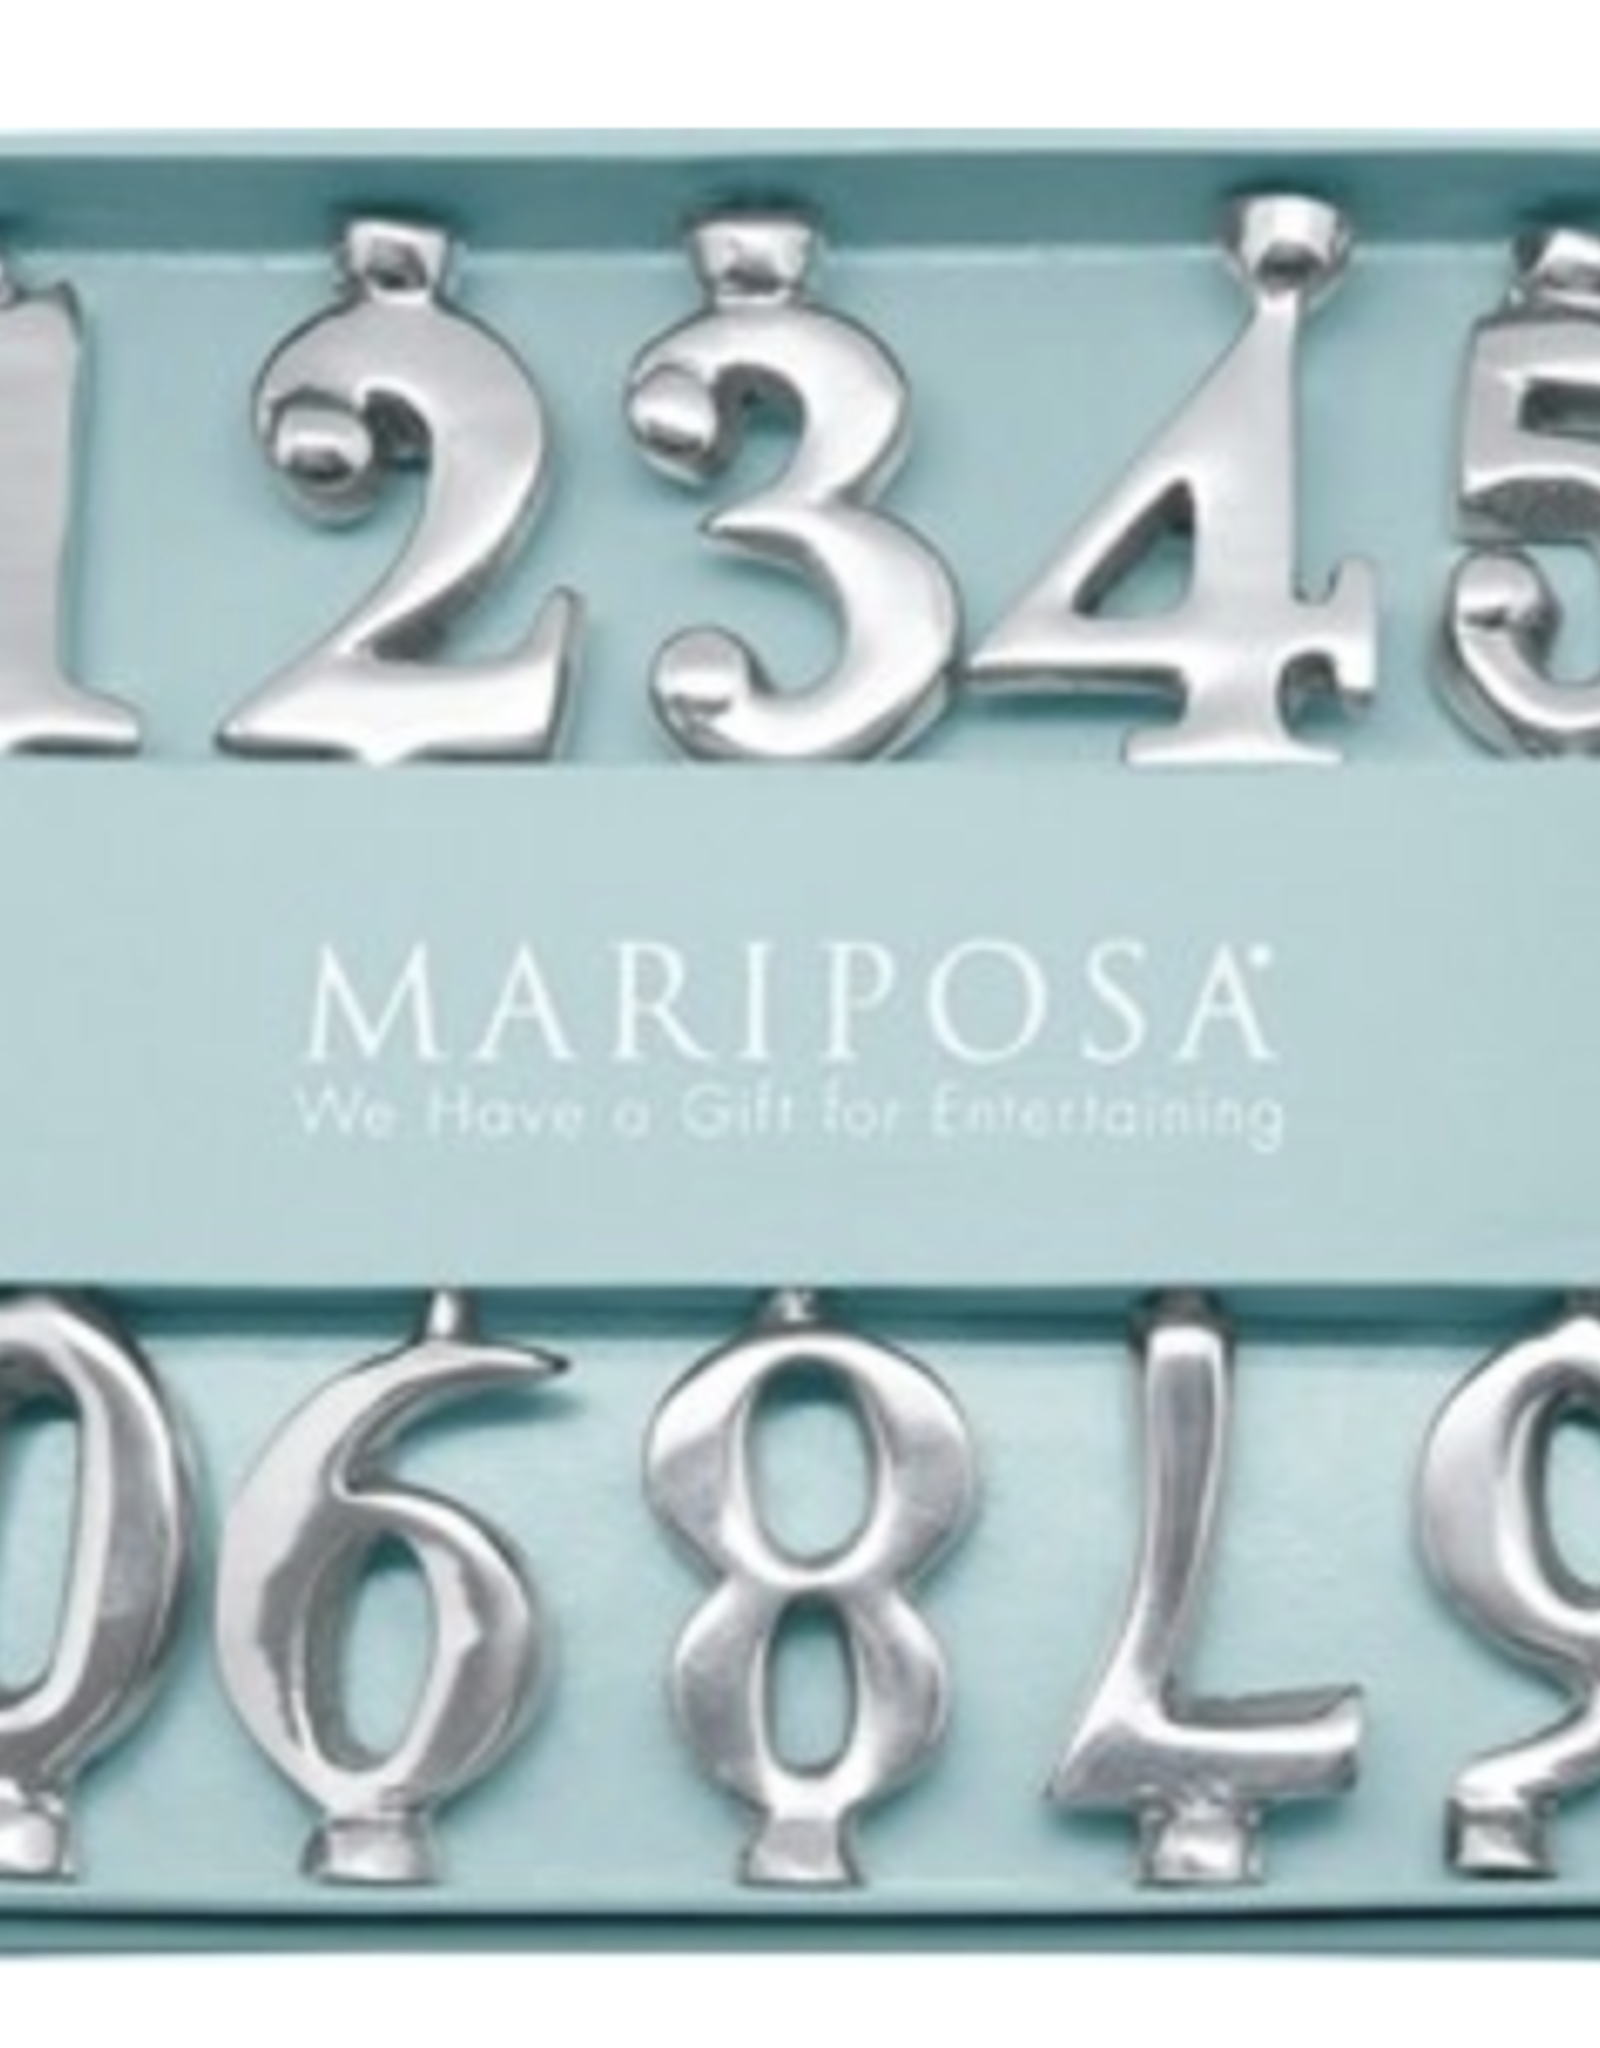 Mariposa Candle Number Holder Set